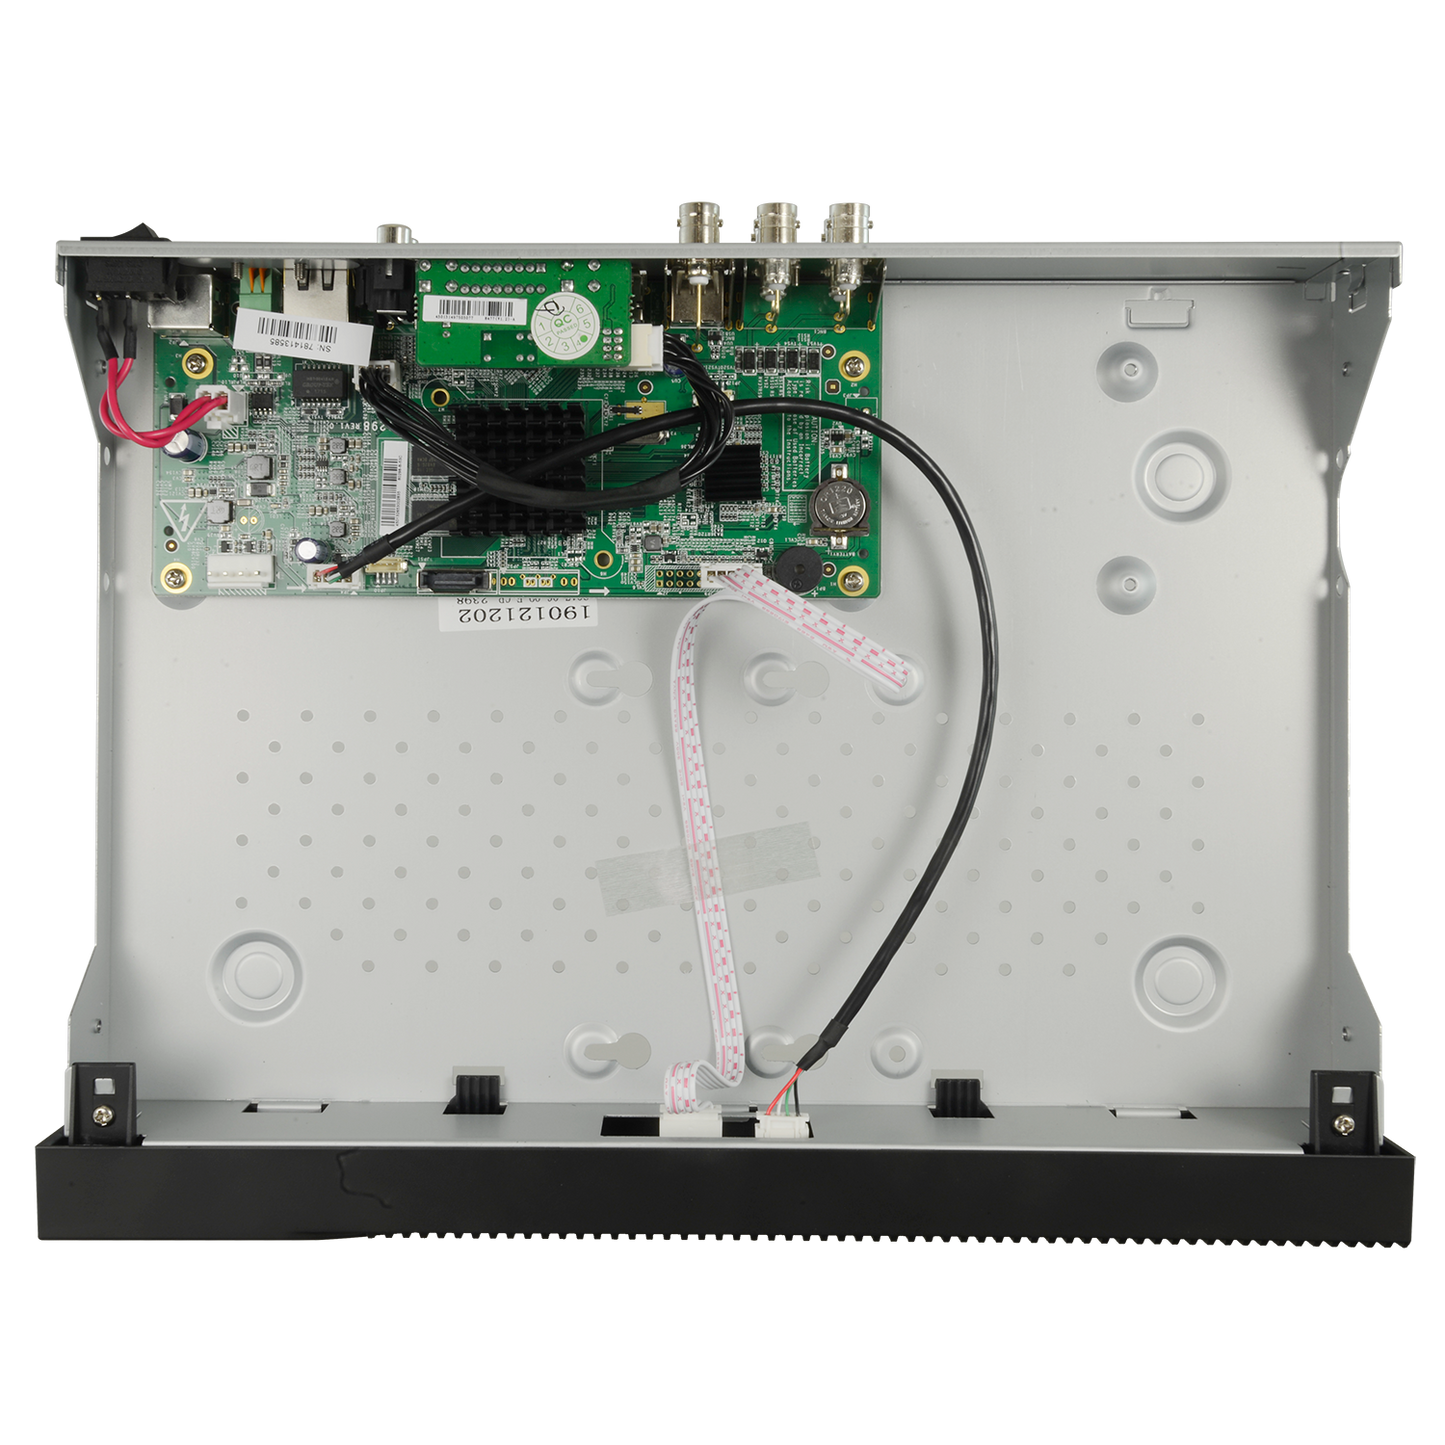 Videoregistratore 5n1 Safire H.265+ - Risparmia spazio e larghezza di banda - 4 CH HDTVI / HDCVI / AHD / CVBS / 1 IP - 4Mpx LiteHDTVI/1080p (12FPS) - Uscita HDMI Full HD, VGA e BNC (CVBS) - Allarmi (4/1) | 1 CH audio / 1 HDD